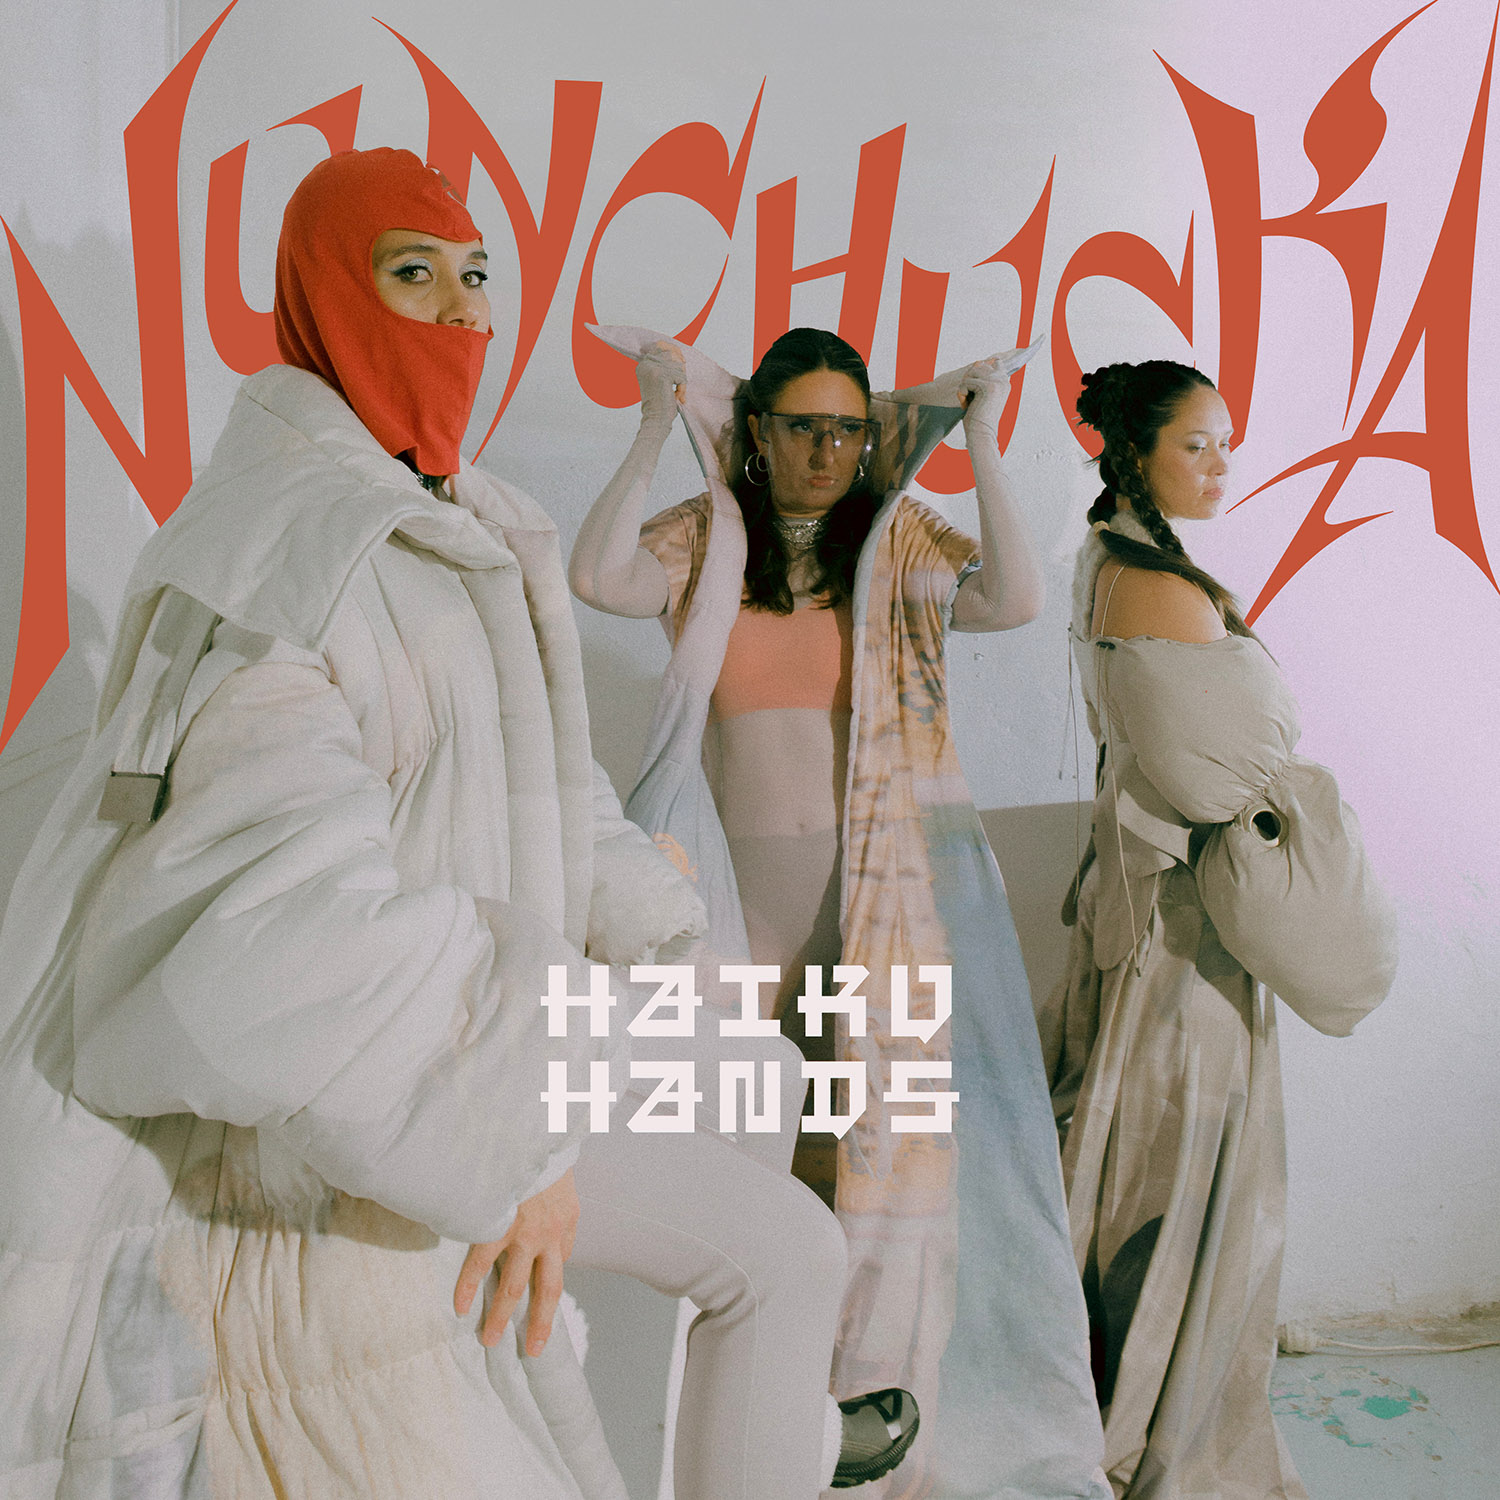 Haiku Hands featuring Ribongia — Nunchucka cover artwork